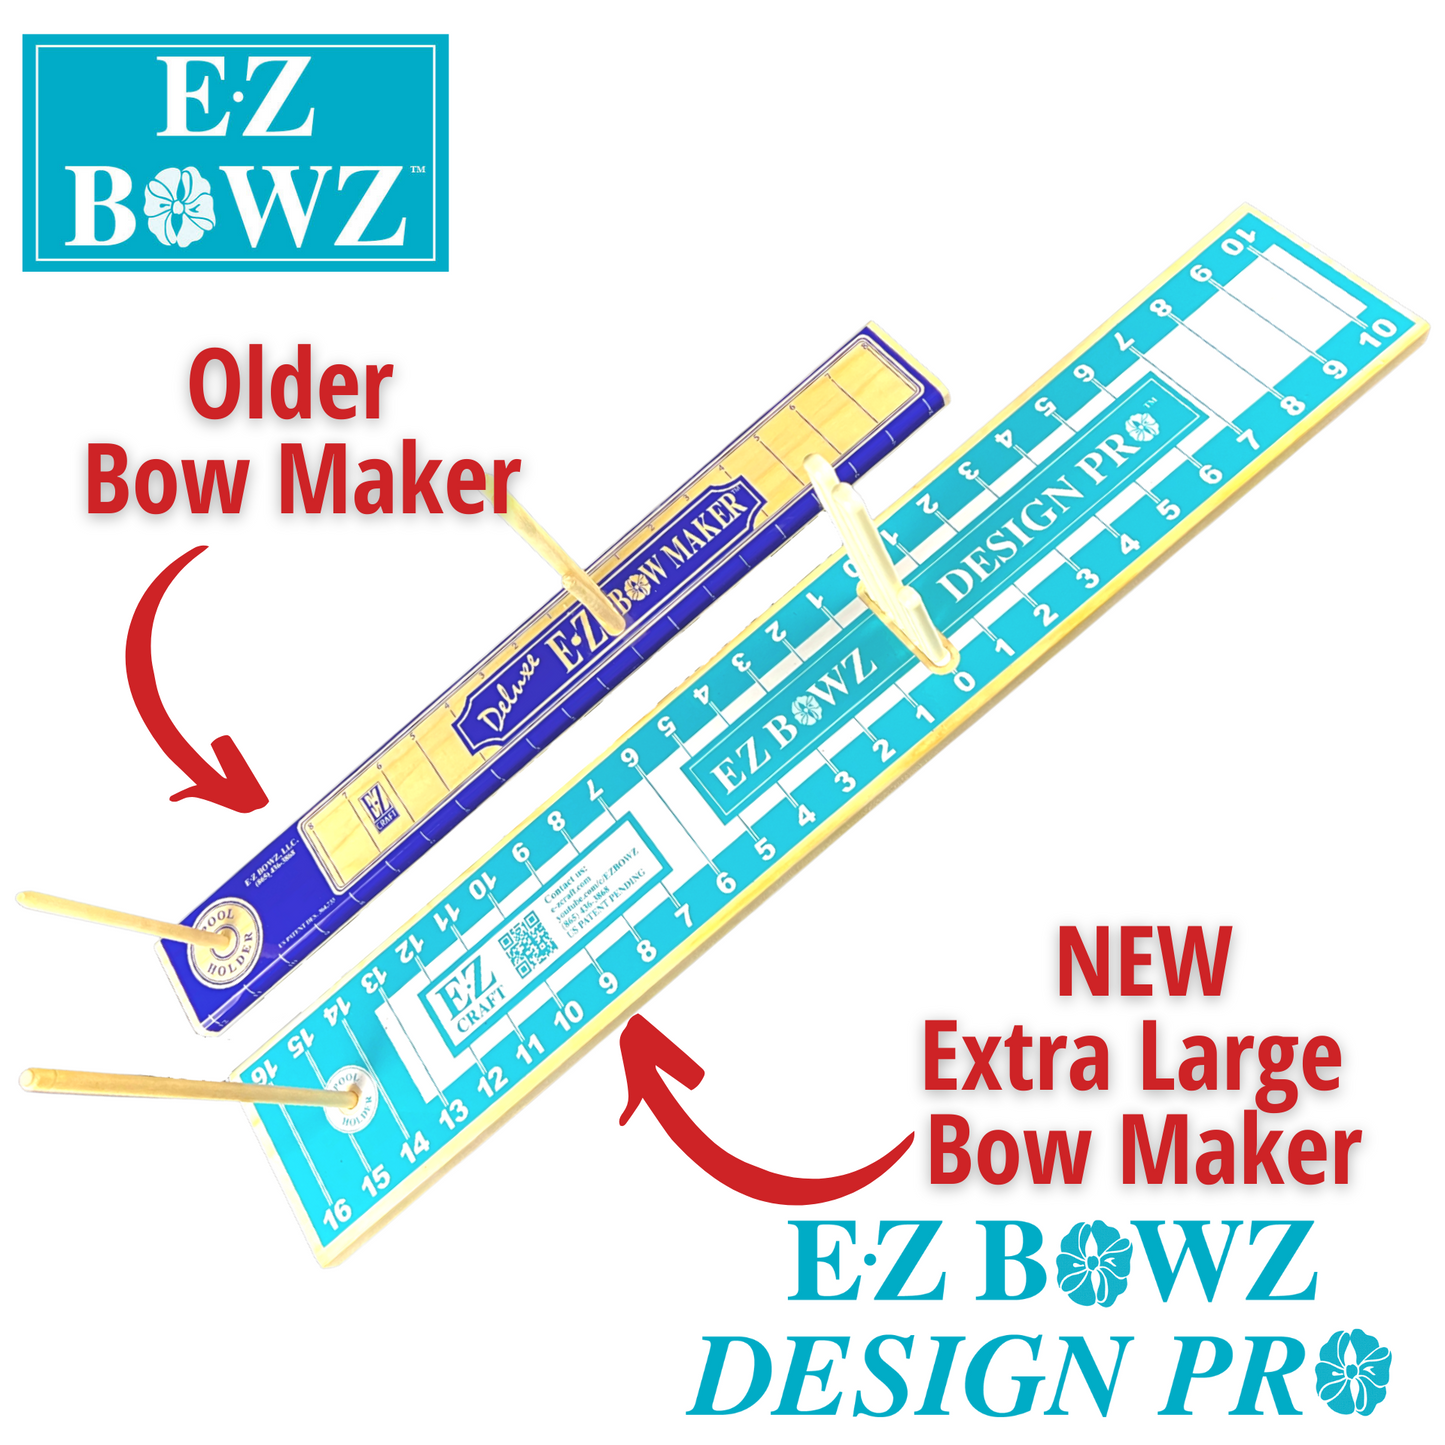 E-Z Bowz Design Pro